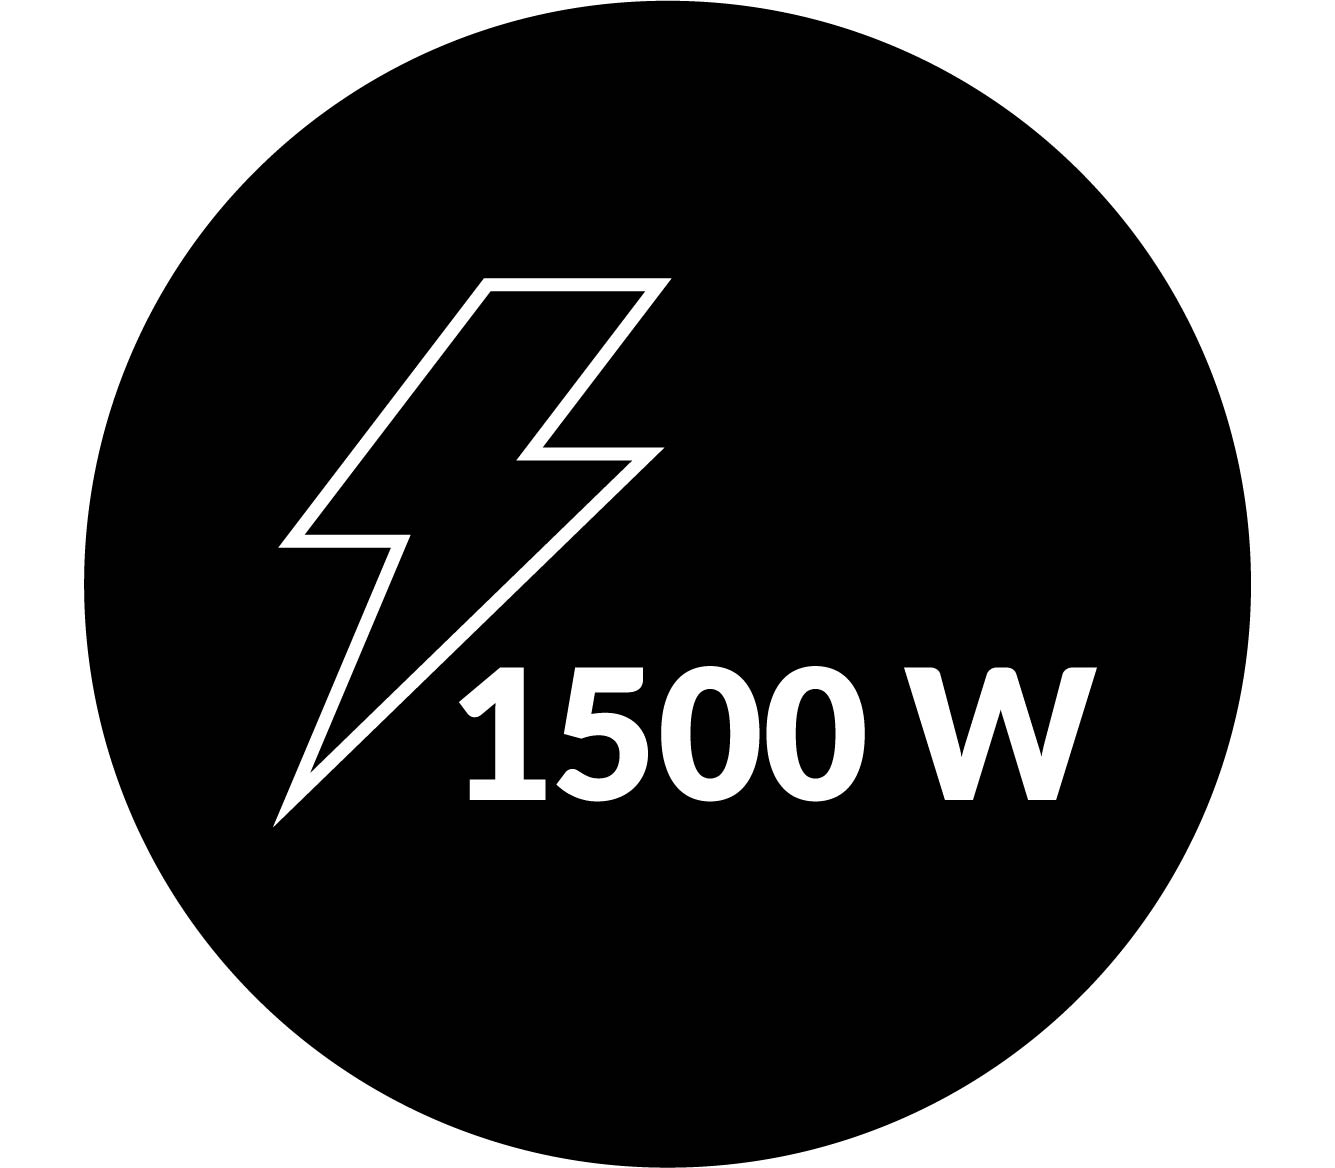 Peak power 1500 w